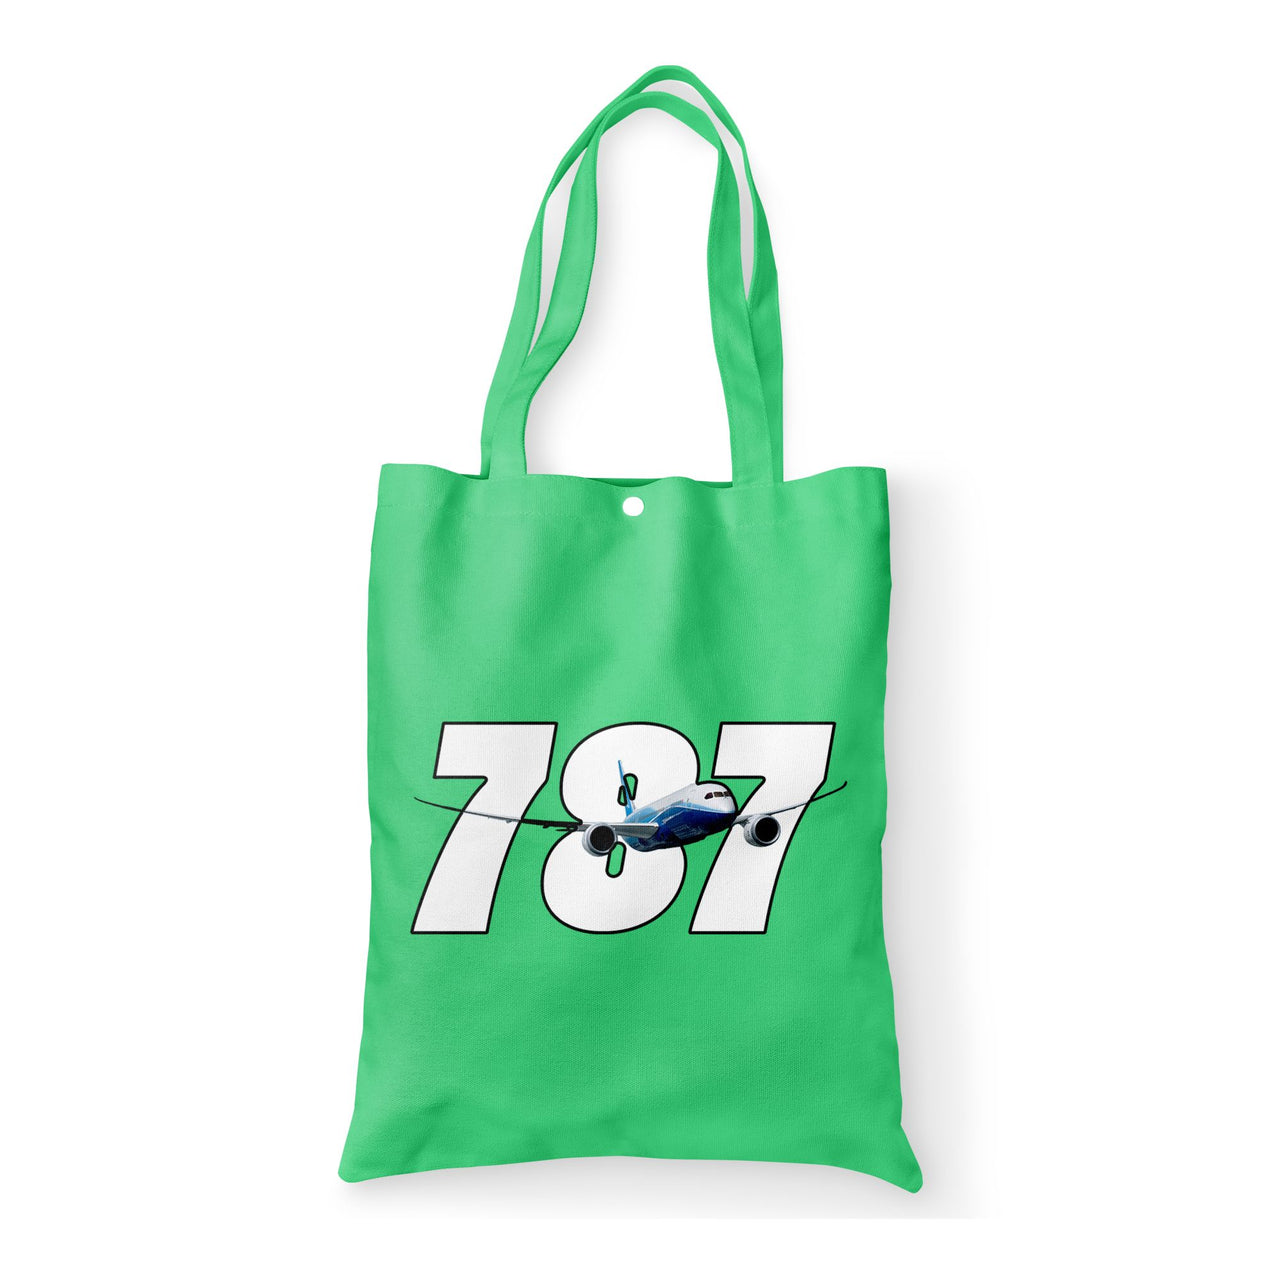 Super Boeing 787 Designed Tote Bags